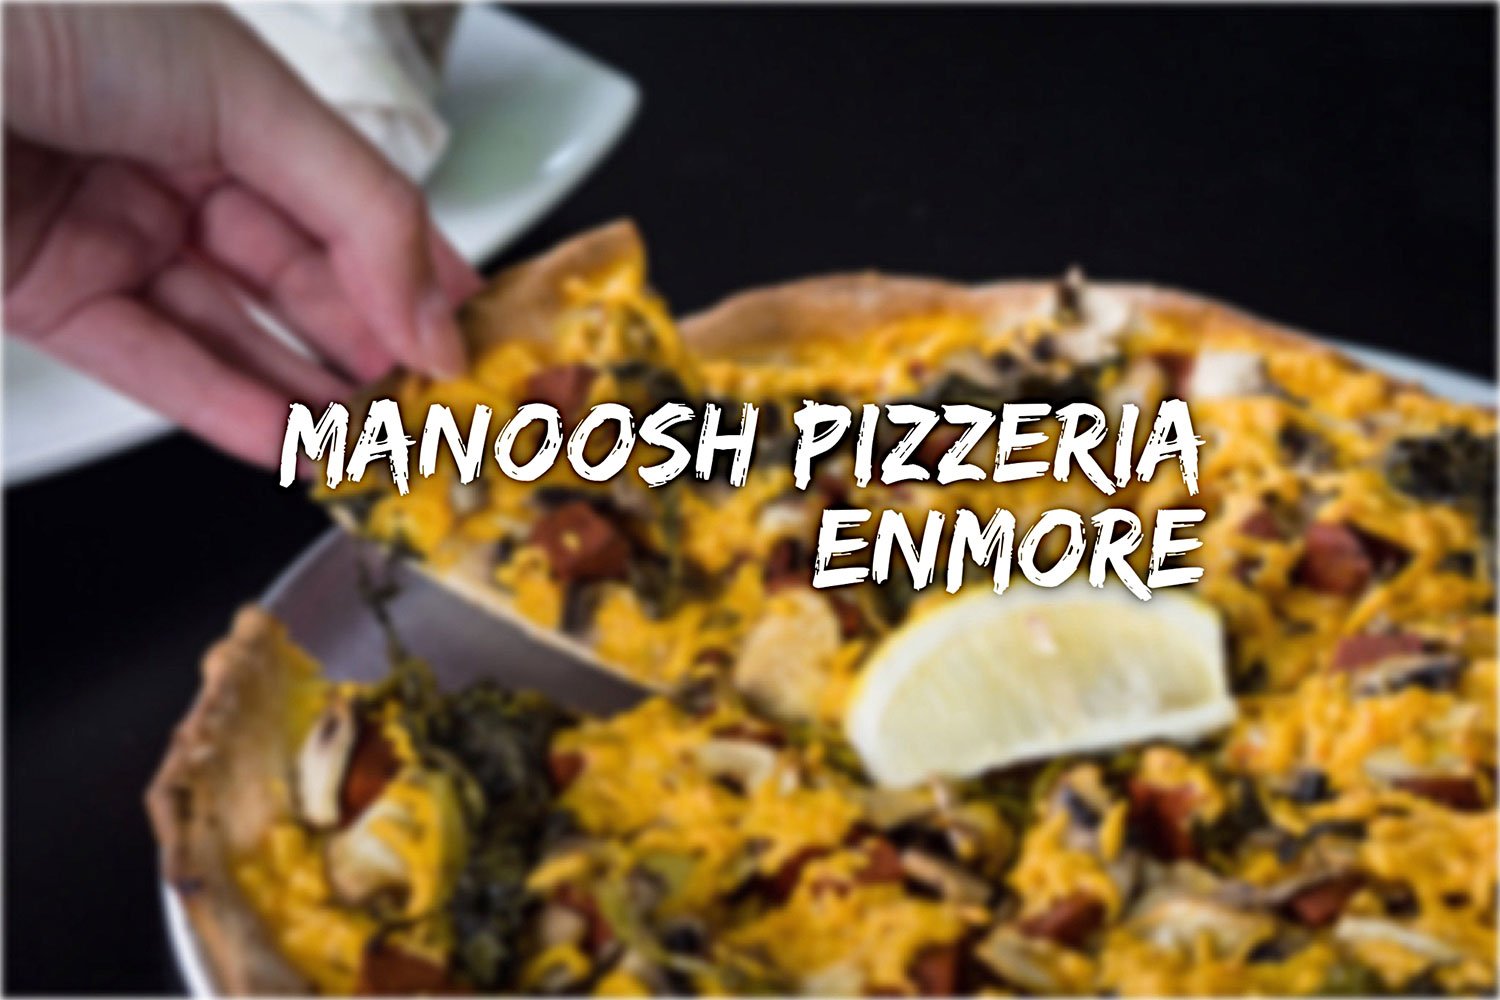 Manoosh Pizzeria, Enmore. Sydney Food Blog Review